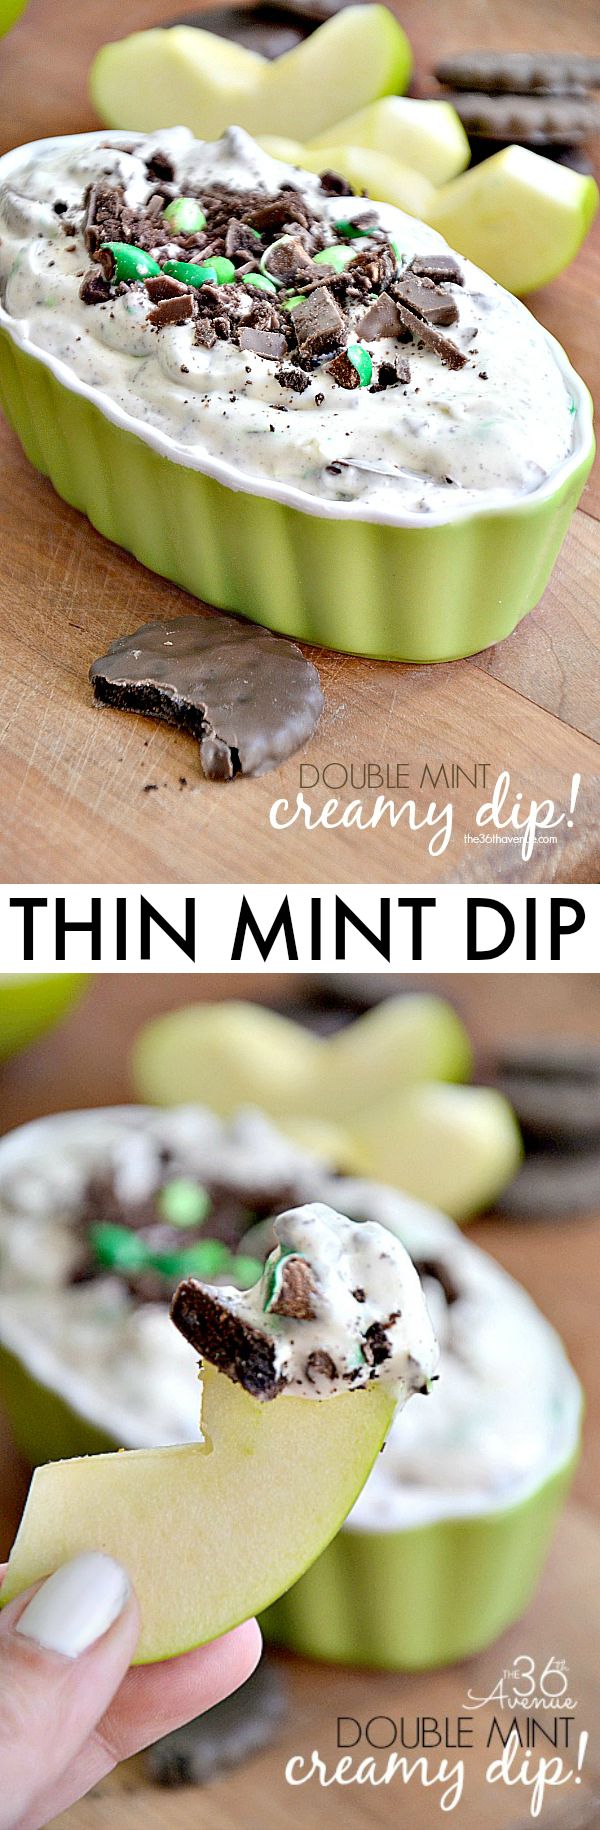 Recipes - Thin Mint Dip at the36thavenue.com So yummy! 